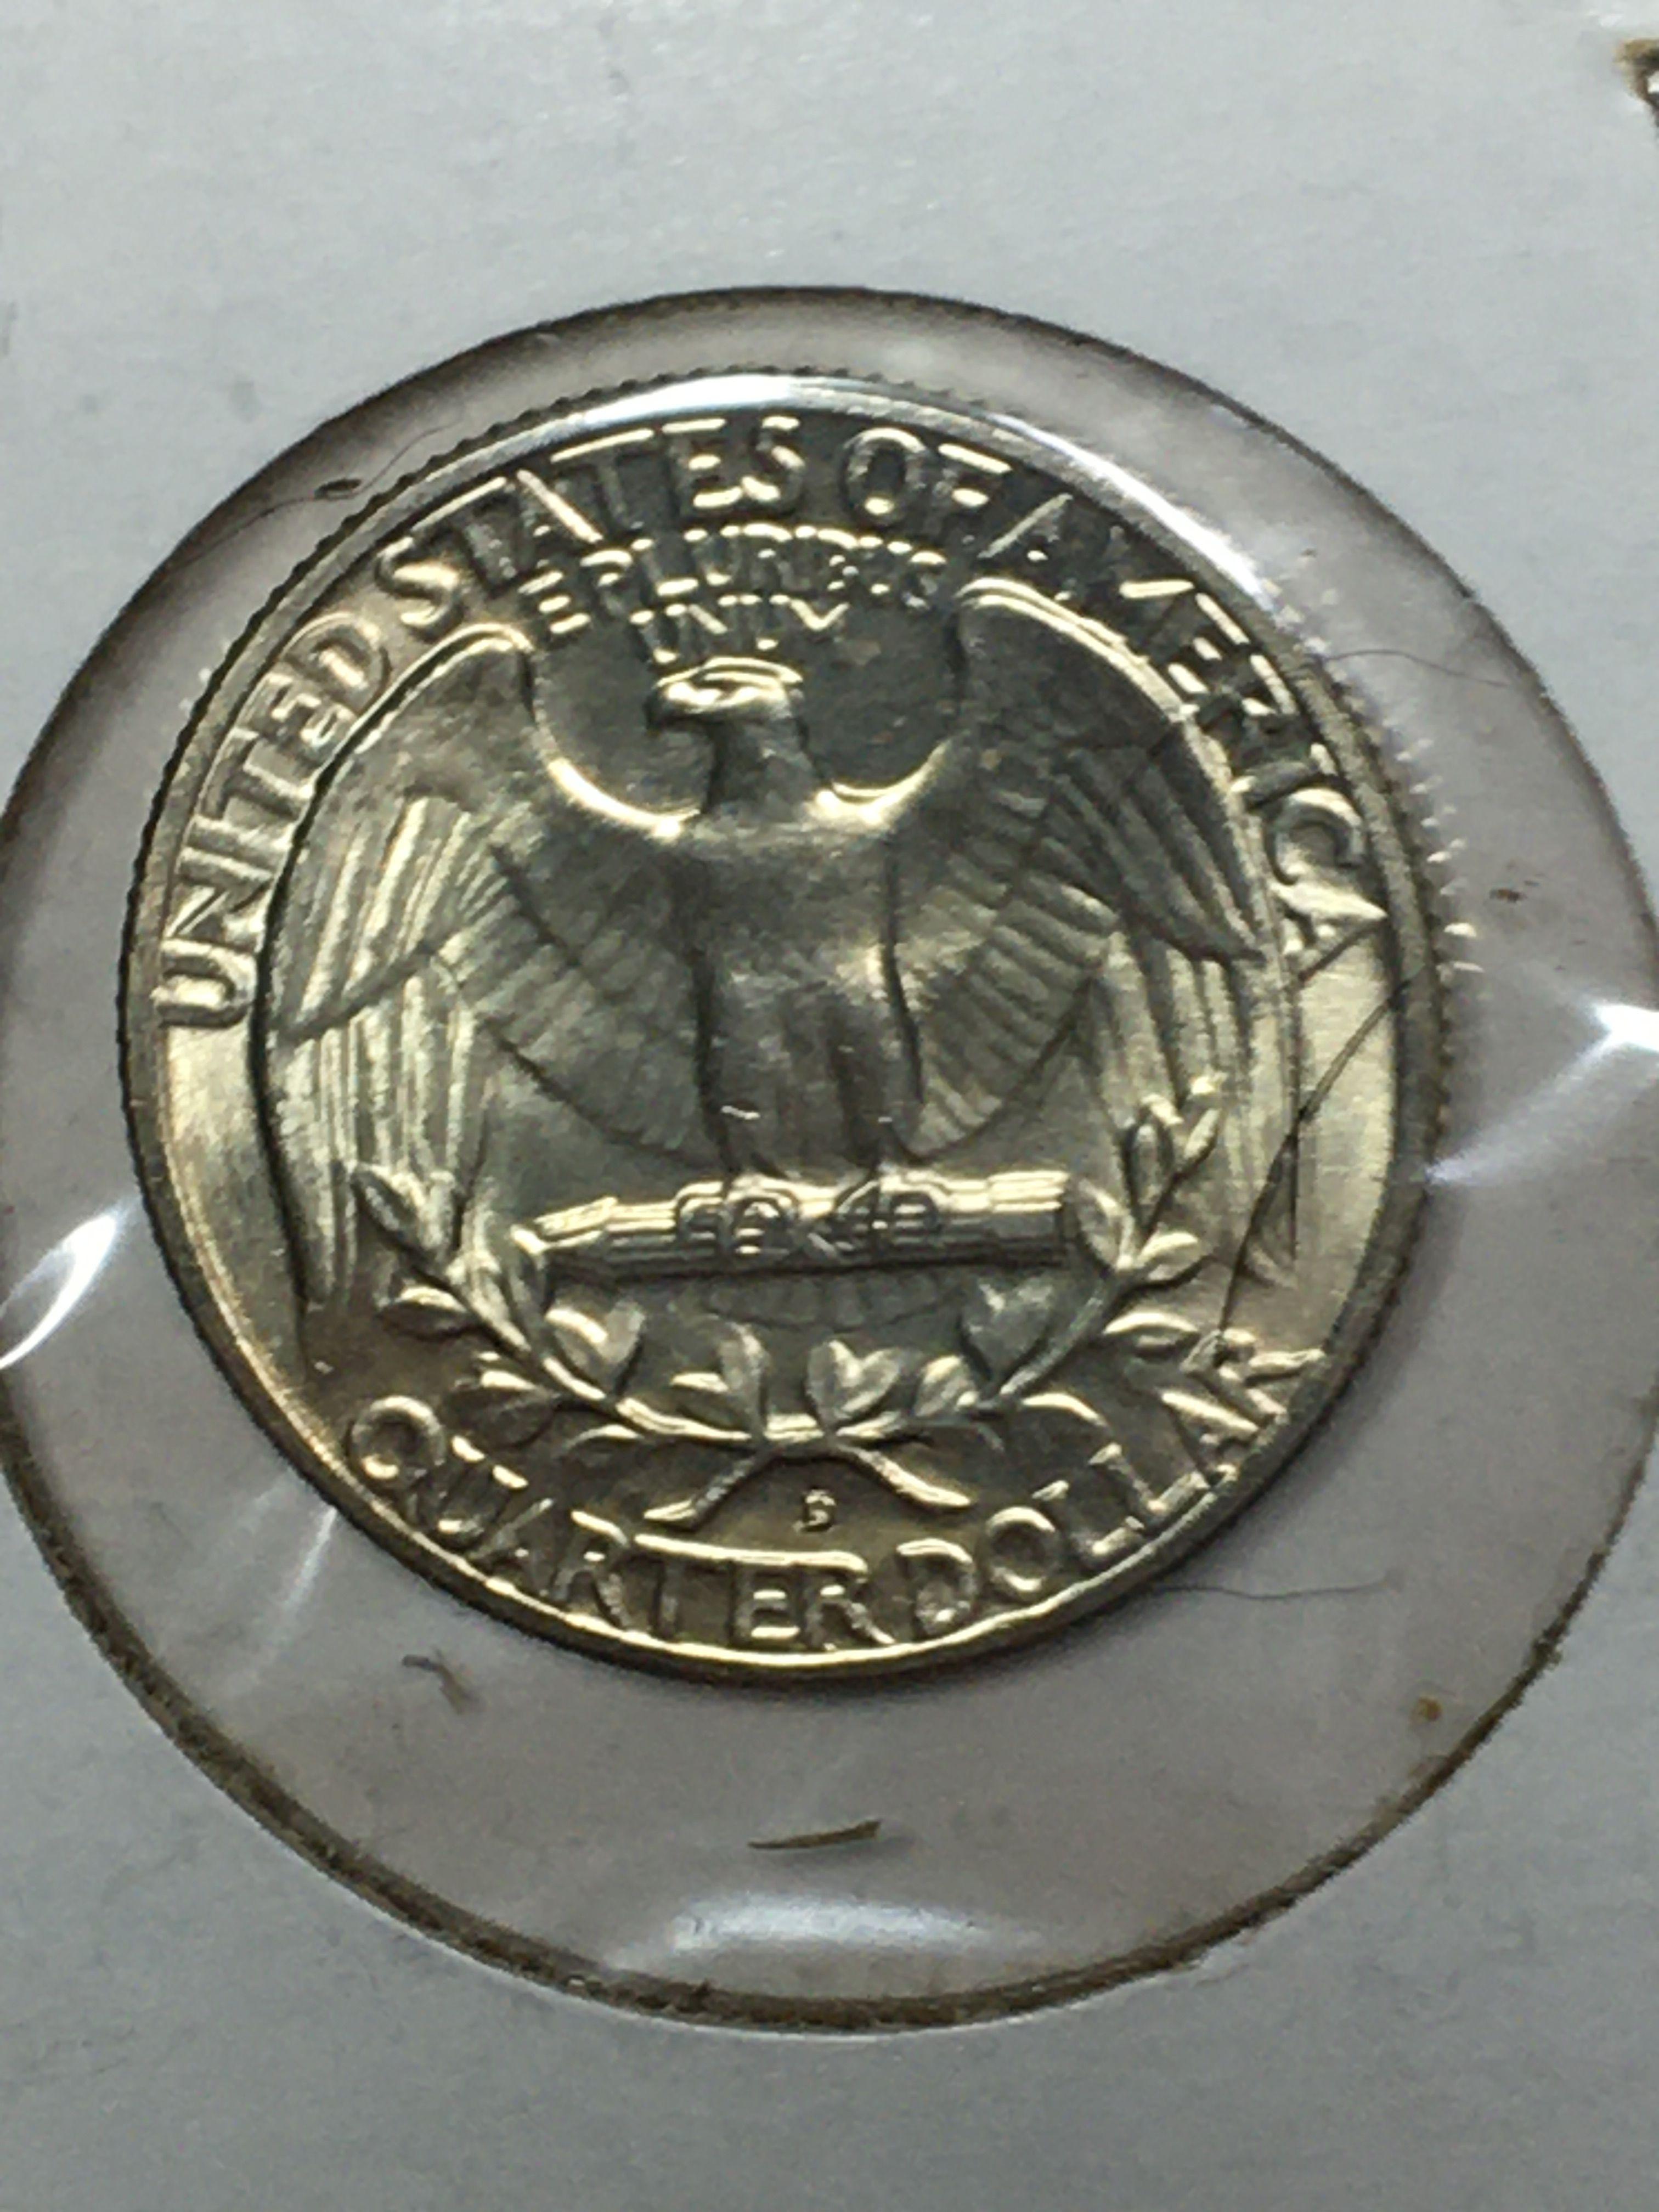 Washington Silver Quarter 1956 Gem High Grade D D O   D D R Wow Coin $$$